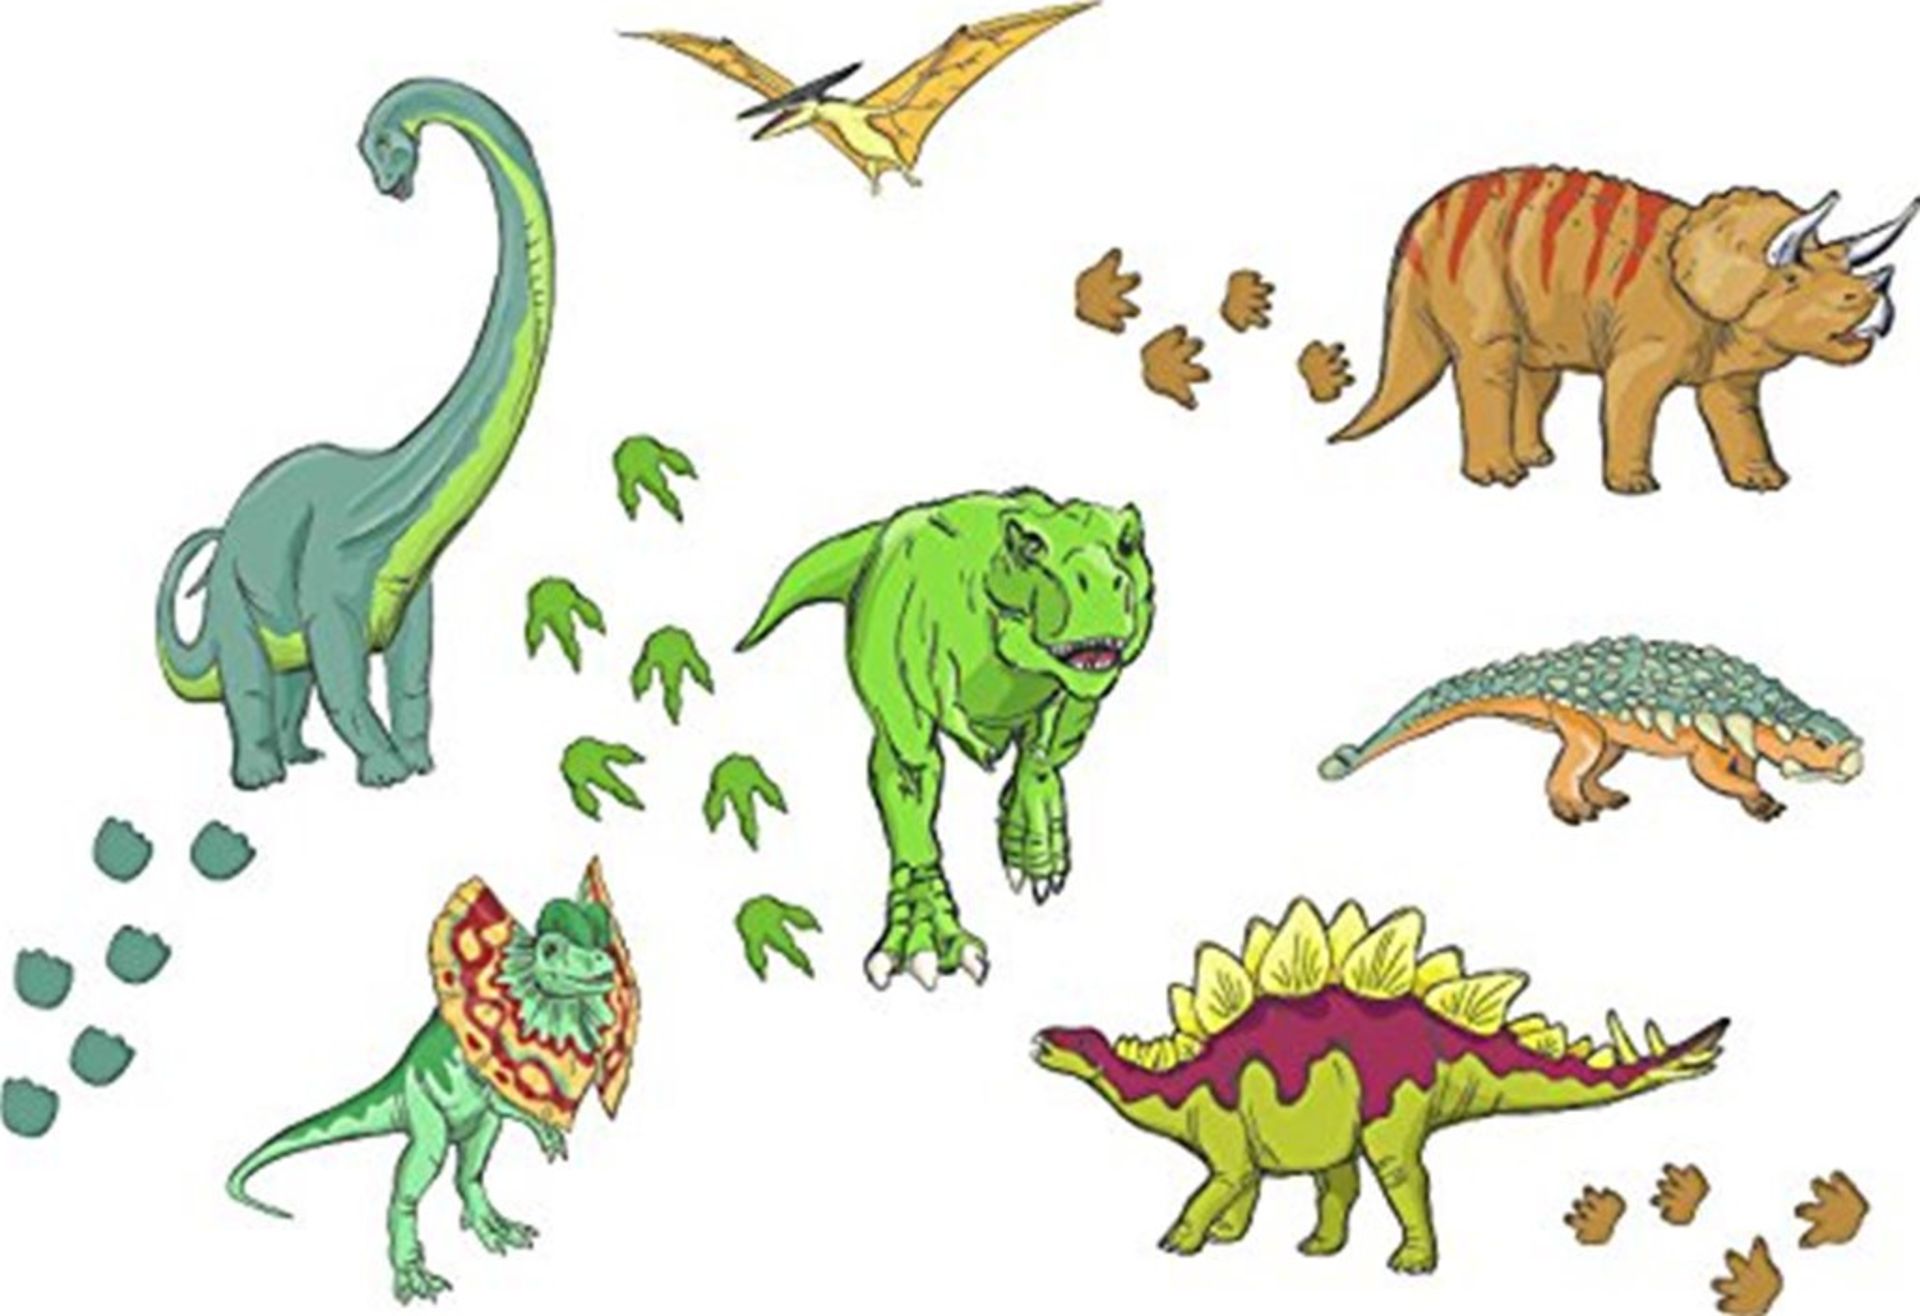 50 sets FunToSee Dinosaur Bedroom and Nursery Wall Stickers - Image 2 of 2